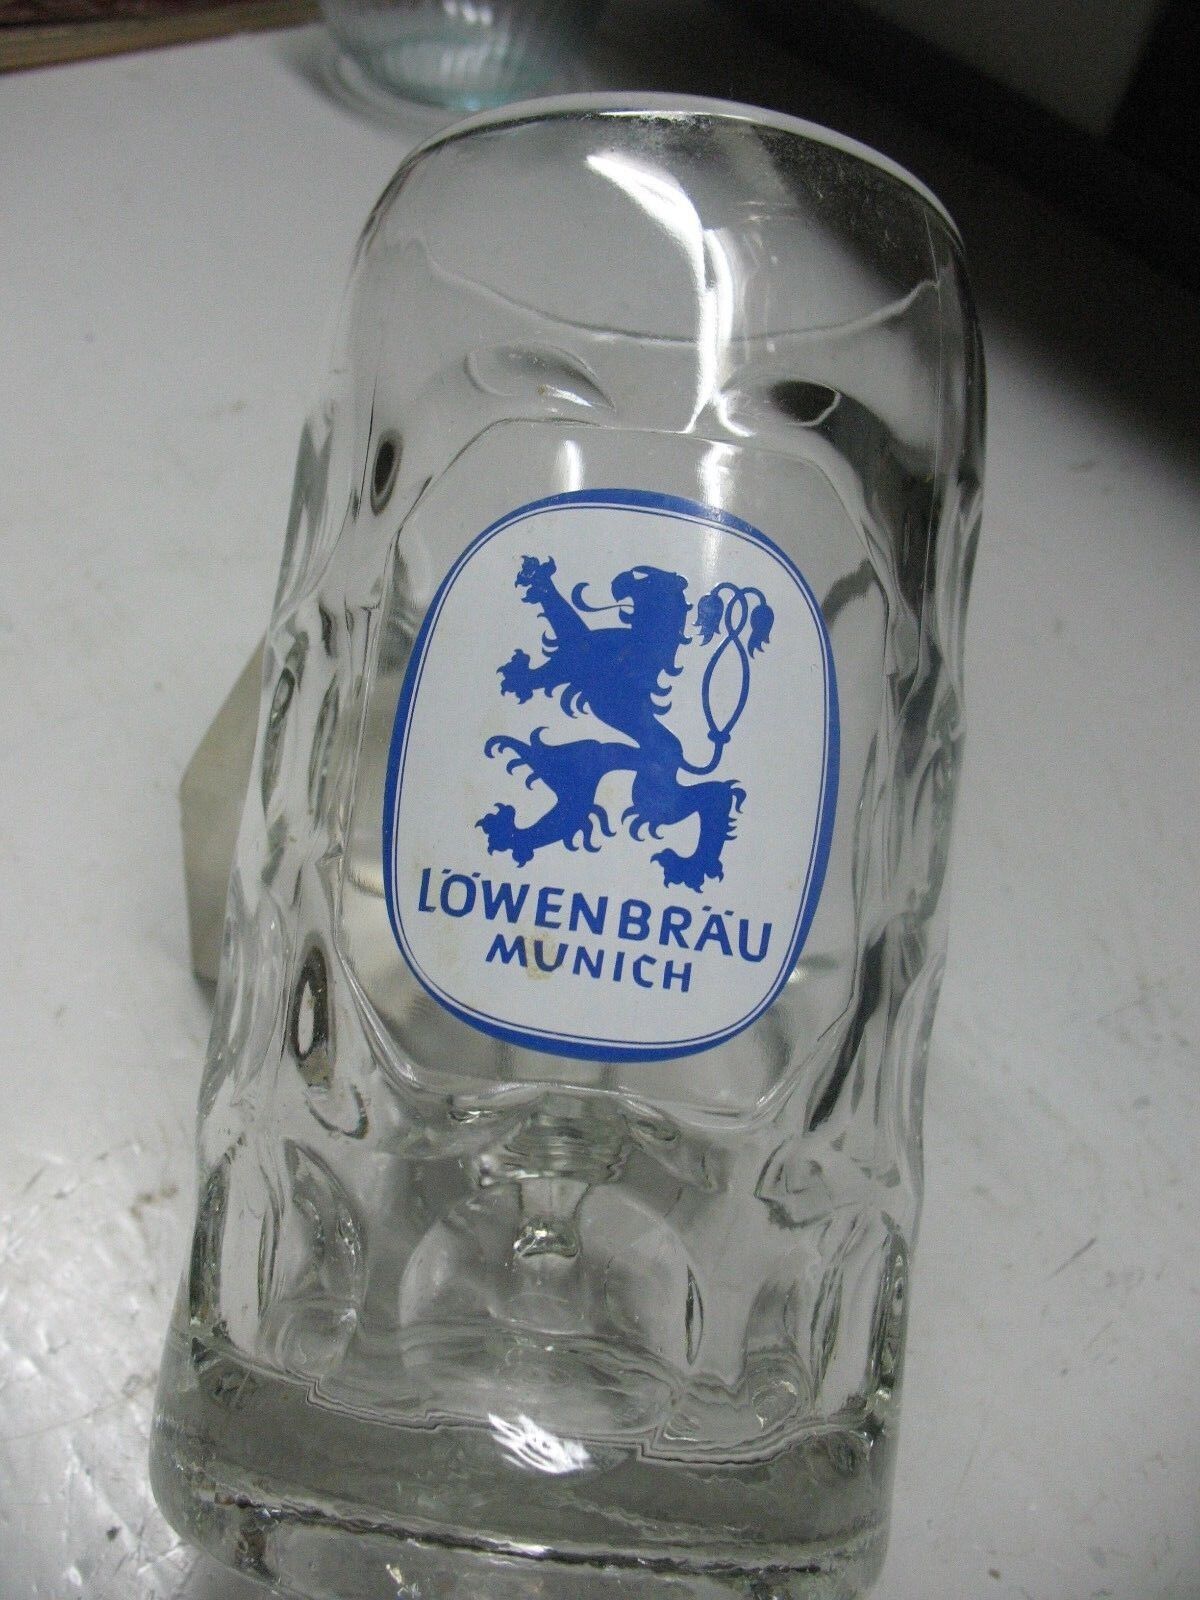 LOWENBRAU  MUNICH  MASSIVE   GLASS  MUG  1 LITER  VINTAGE  ORIGINAL  GERMANY   